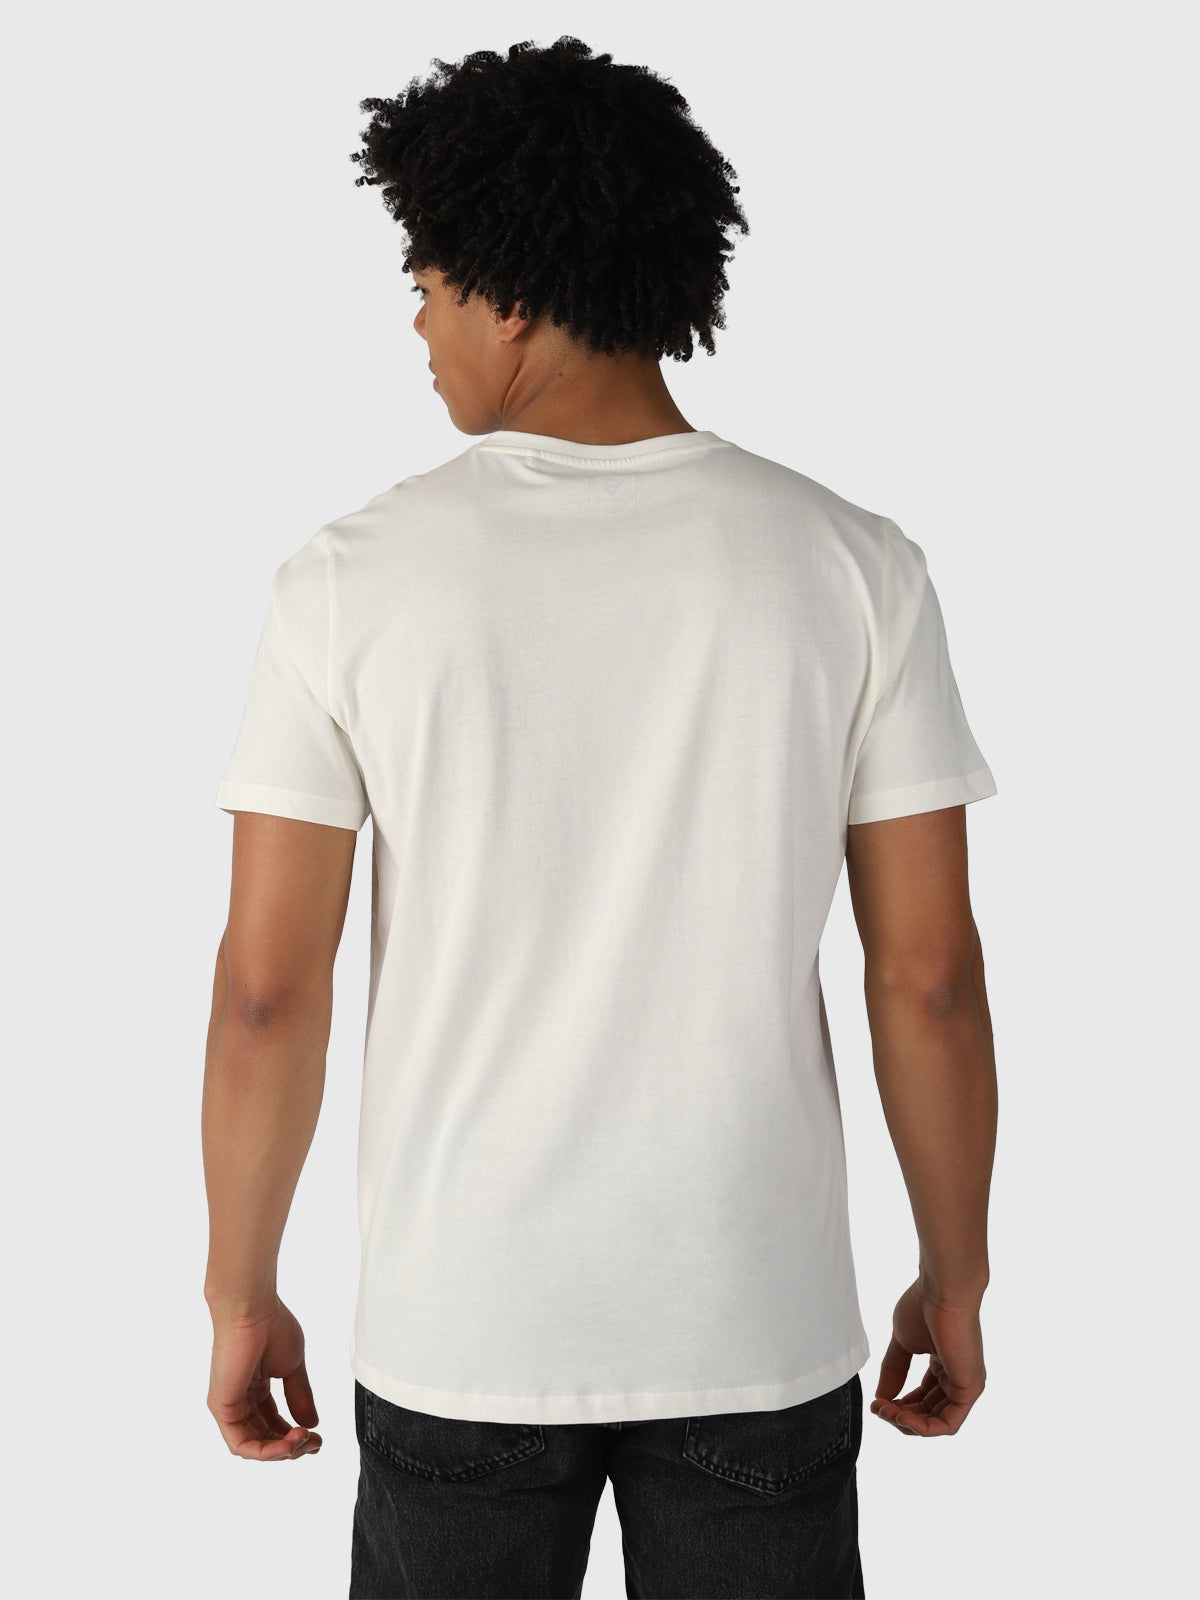 Timo-R Men T-Shirt | White